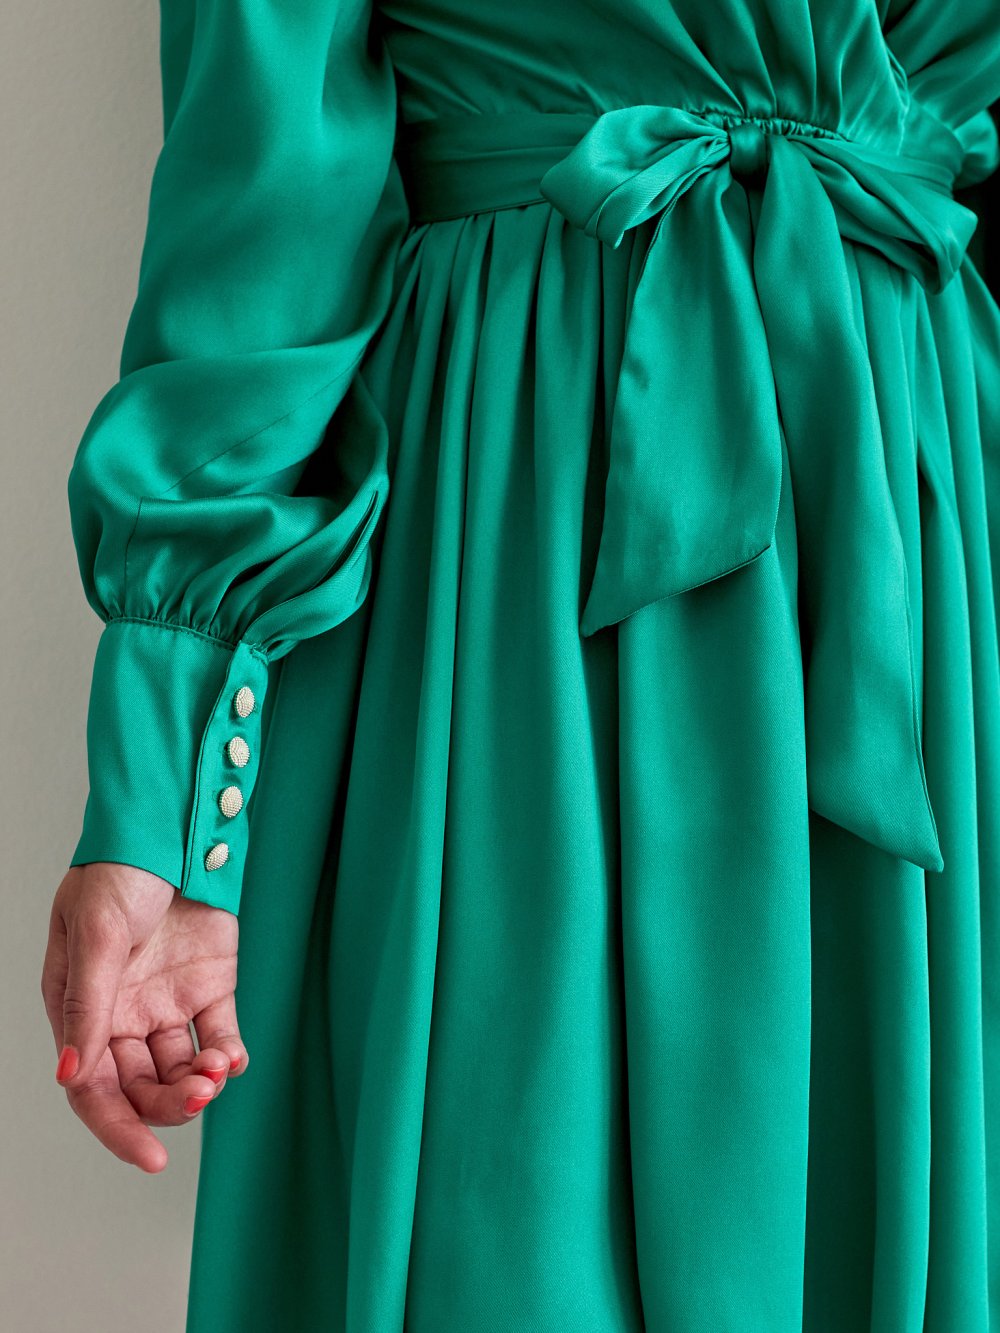 Svetlozelené šaty Francesca